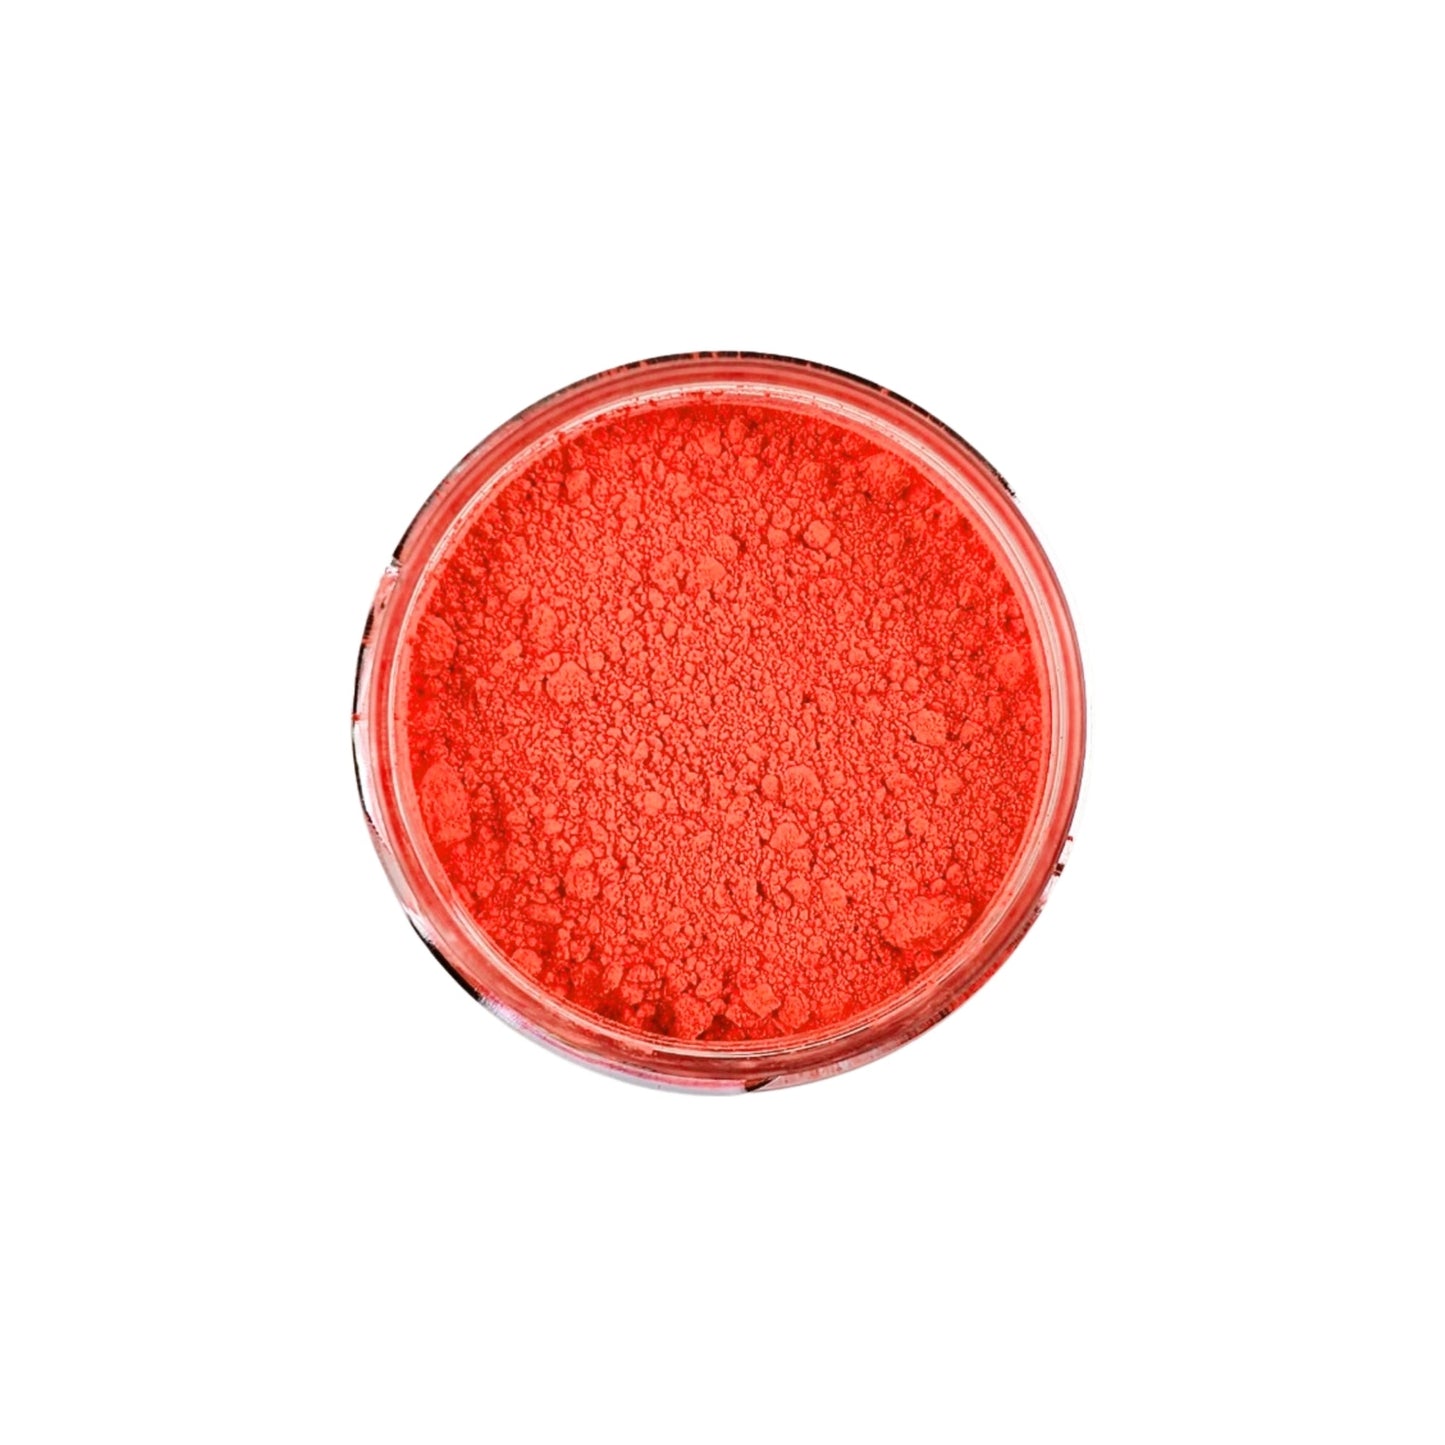 Blood Orange Neon Orange Perfect Pigments Powder